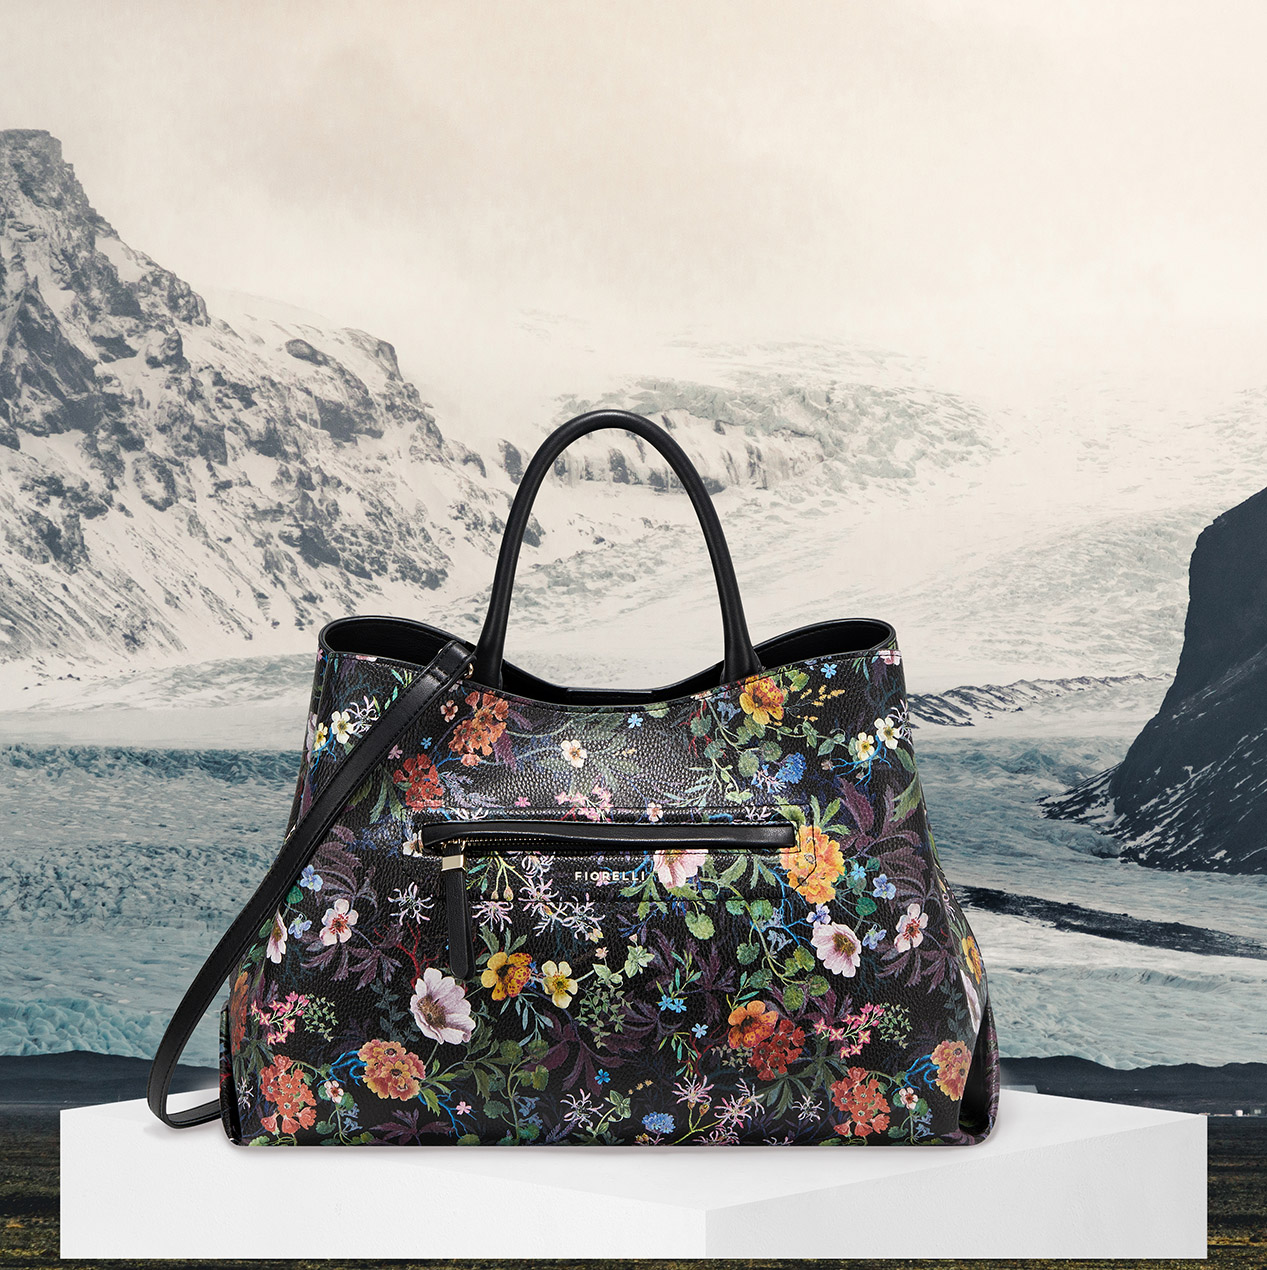 Dark winter botanical floral print by Em Prové, featured on Fiorelli handbag